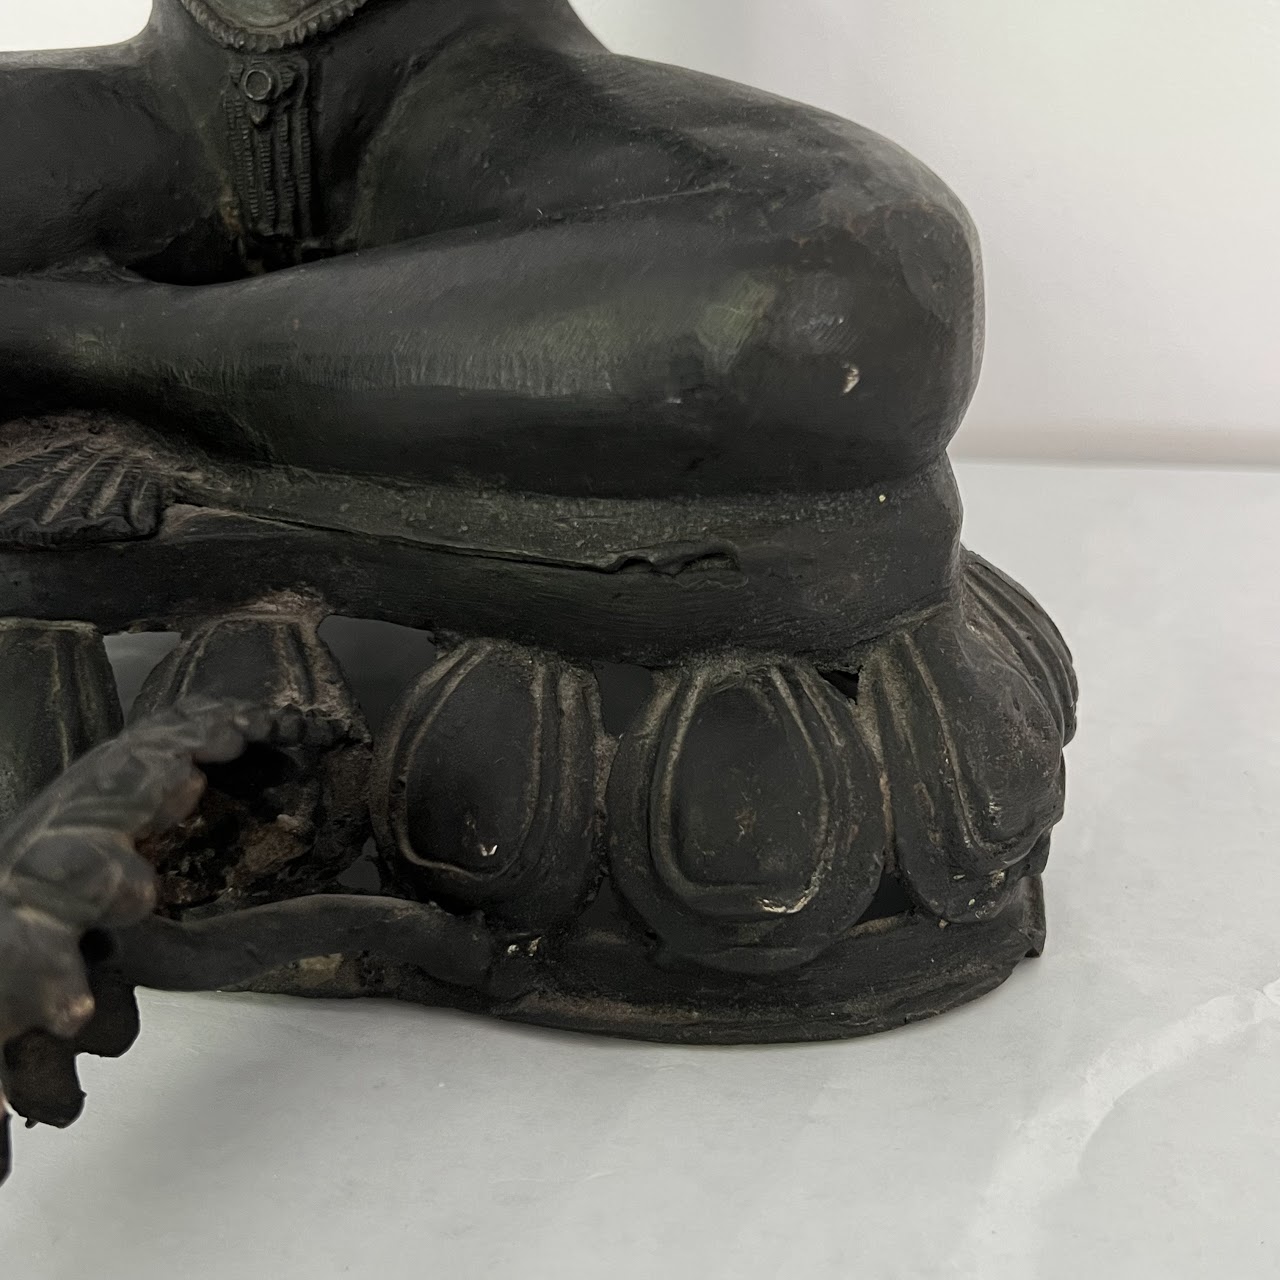 Metal Buddhist Seated Green Tara Statue